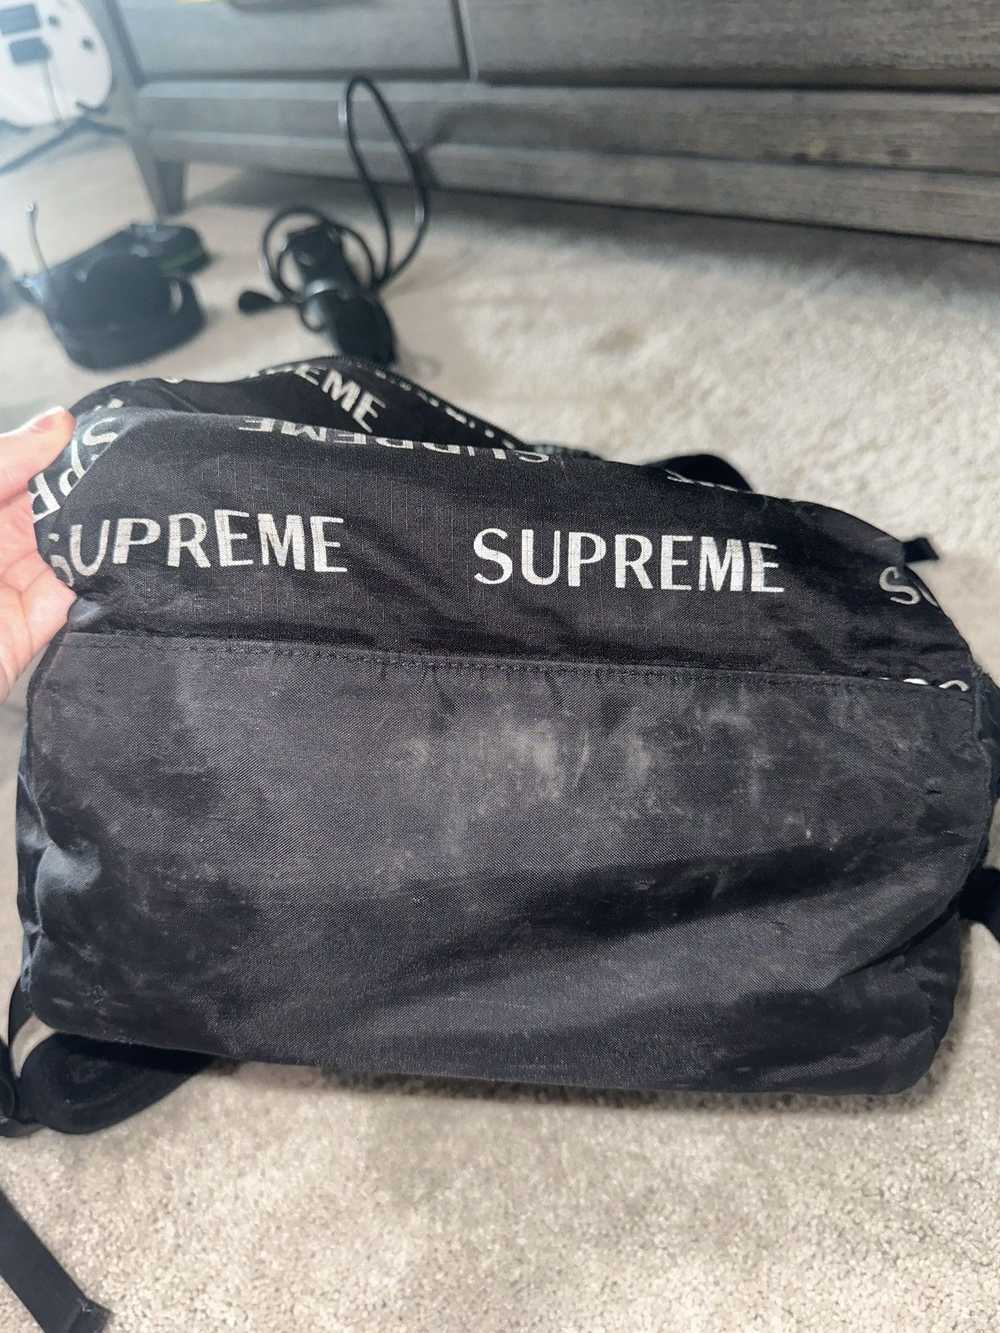 Supreme Supreme Reflective Backpack - image 5